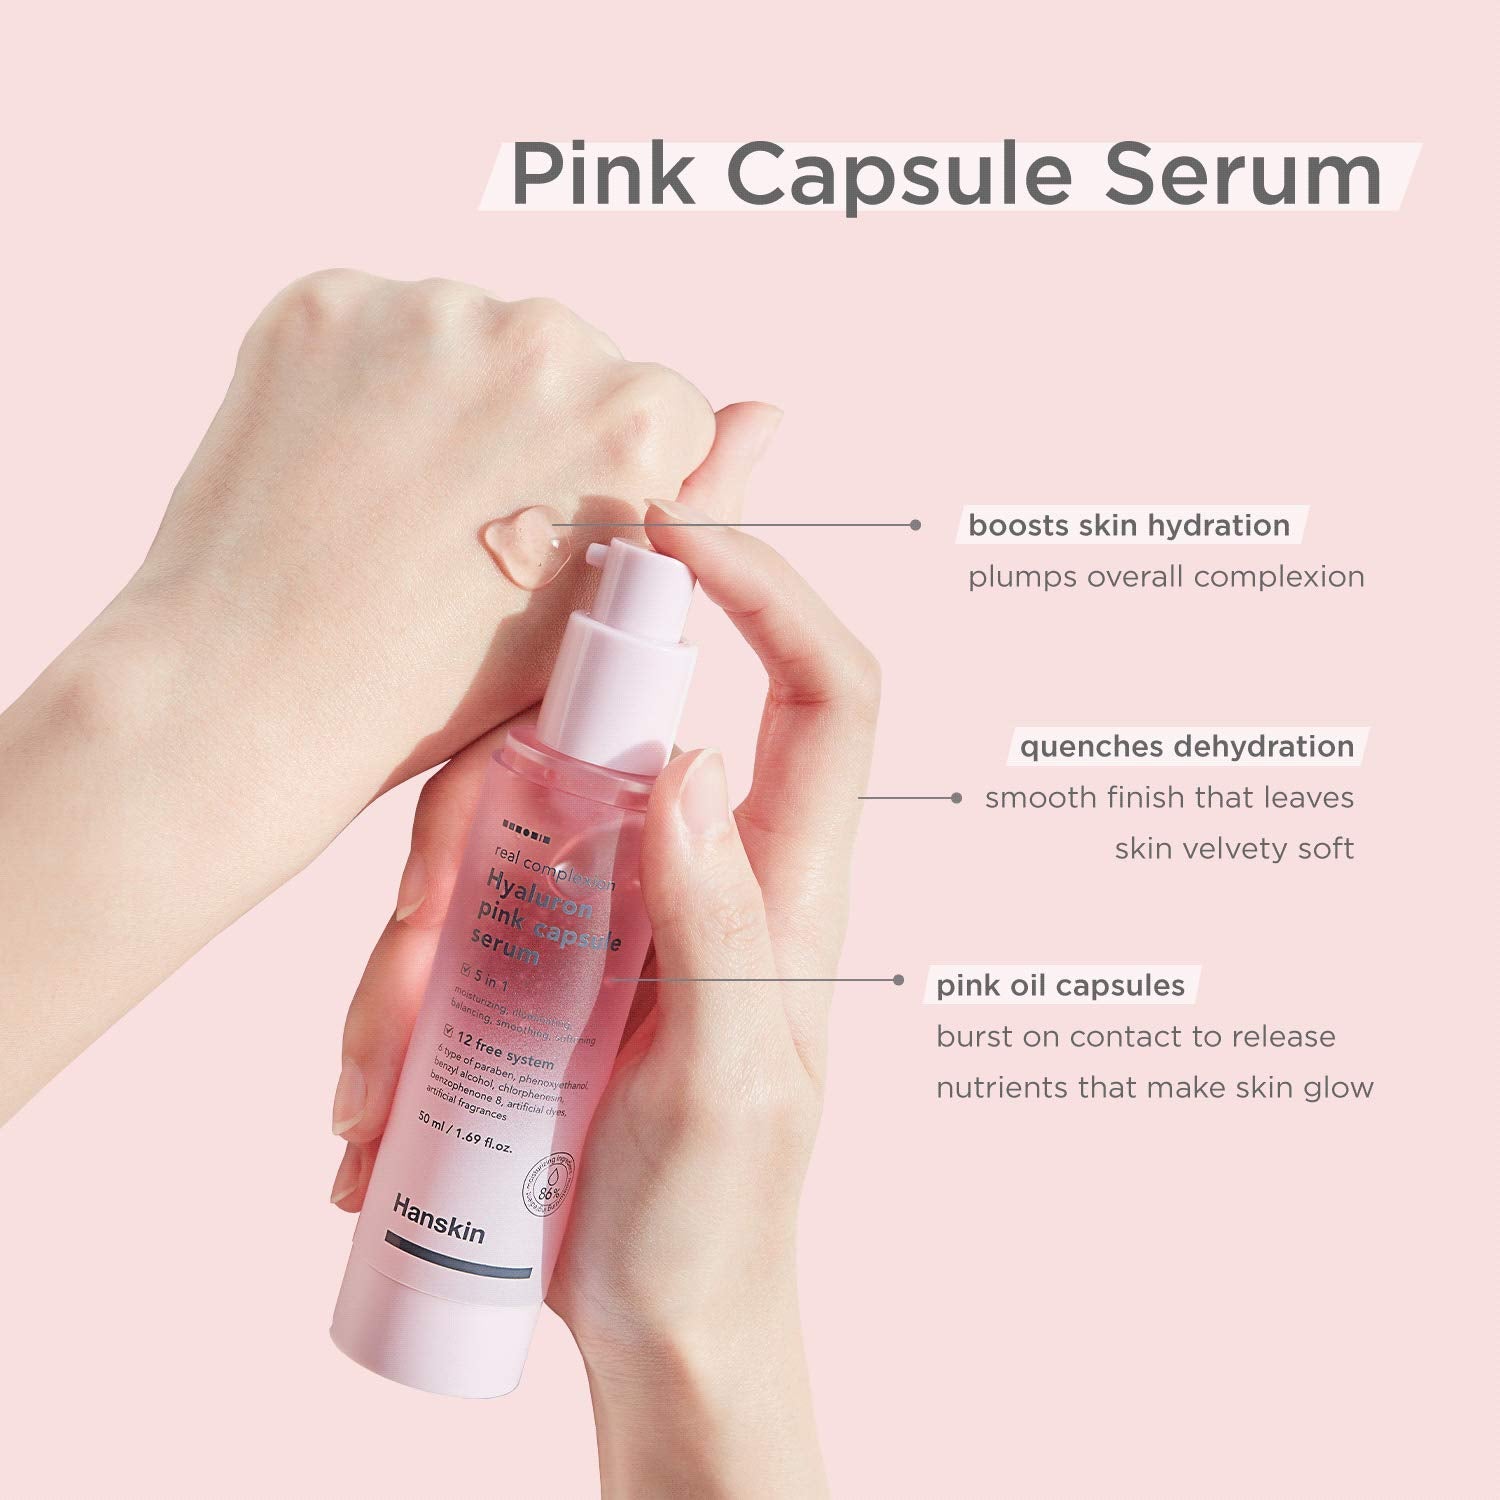 Real Complexion Hyaluron Pink Capsule Serum Hanskin - 50 ml